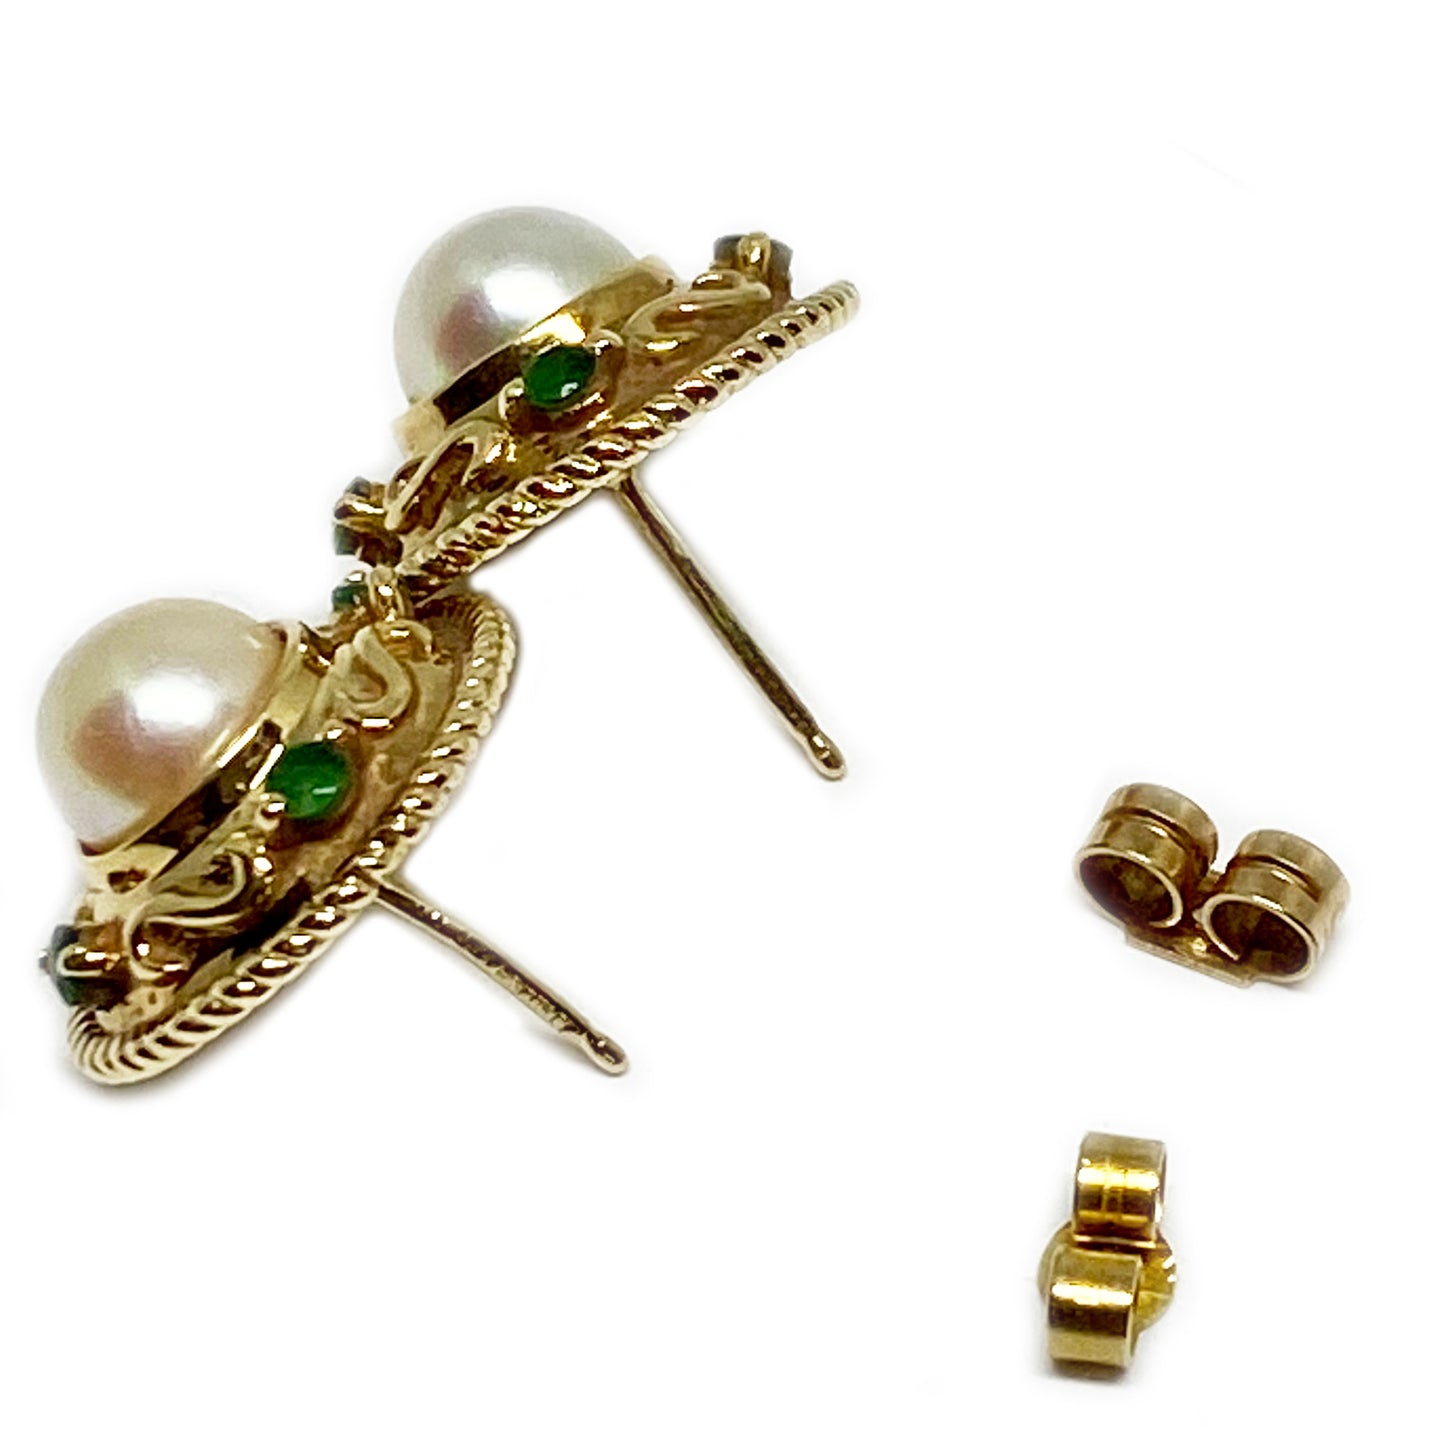 Vintage 9k Gold Mabe Pearl Green Stone Stud Earrings